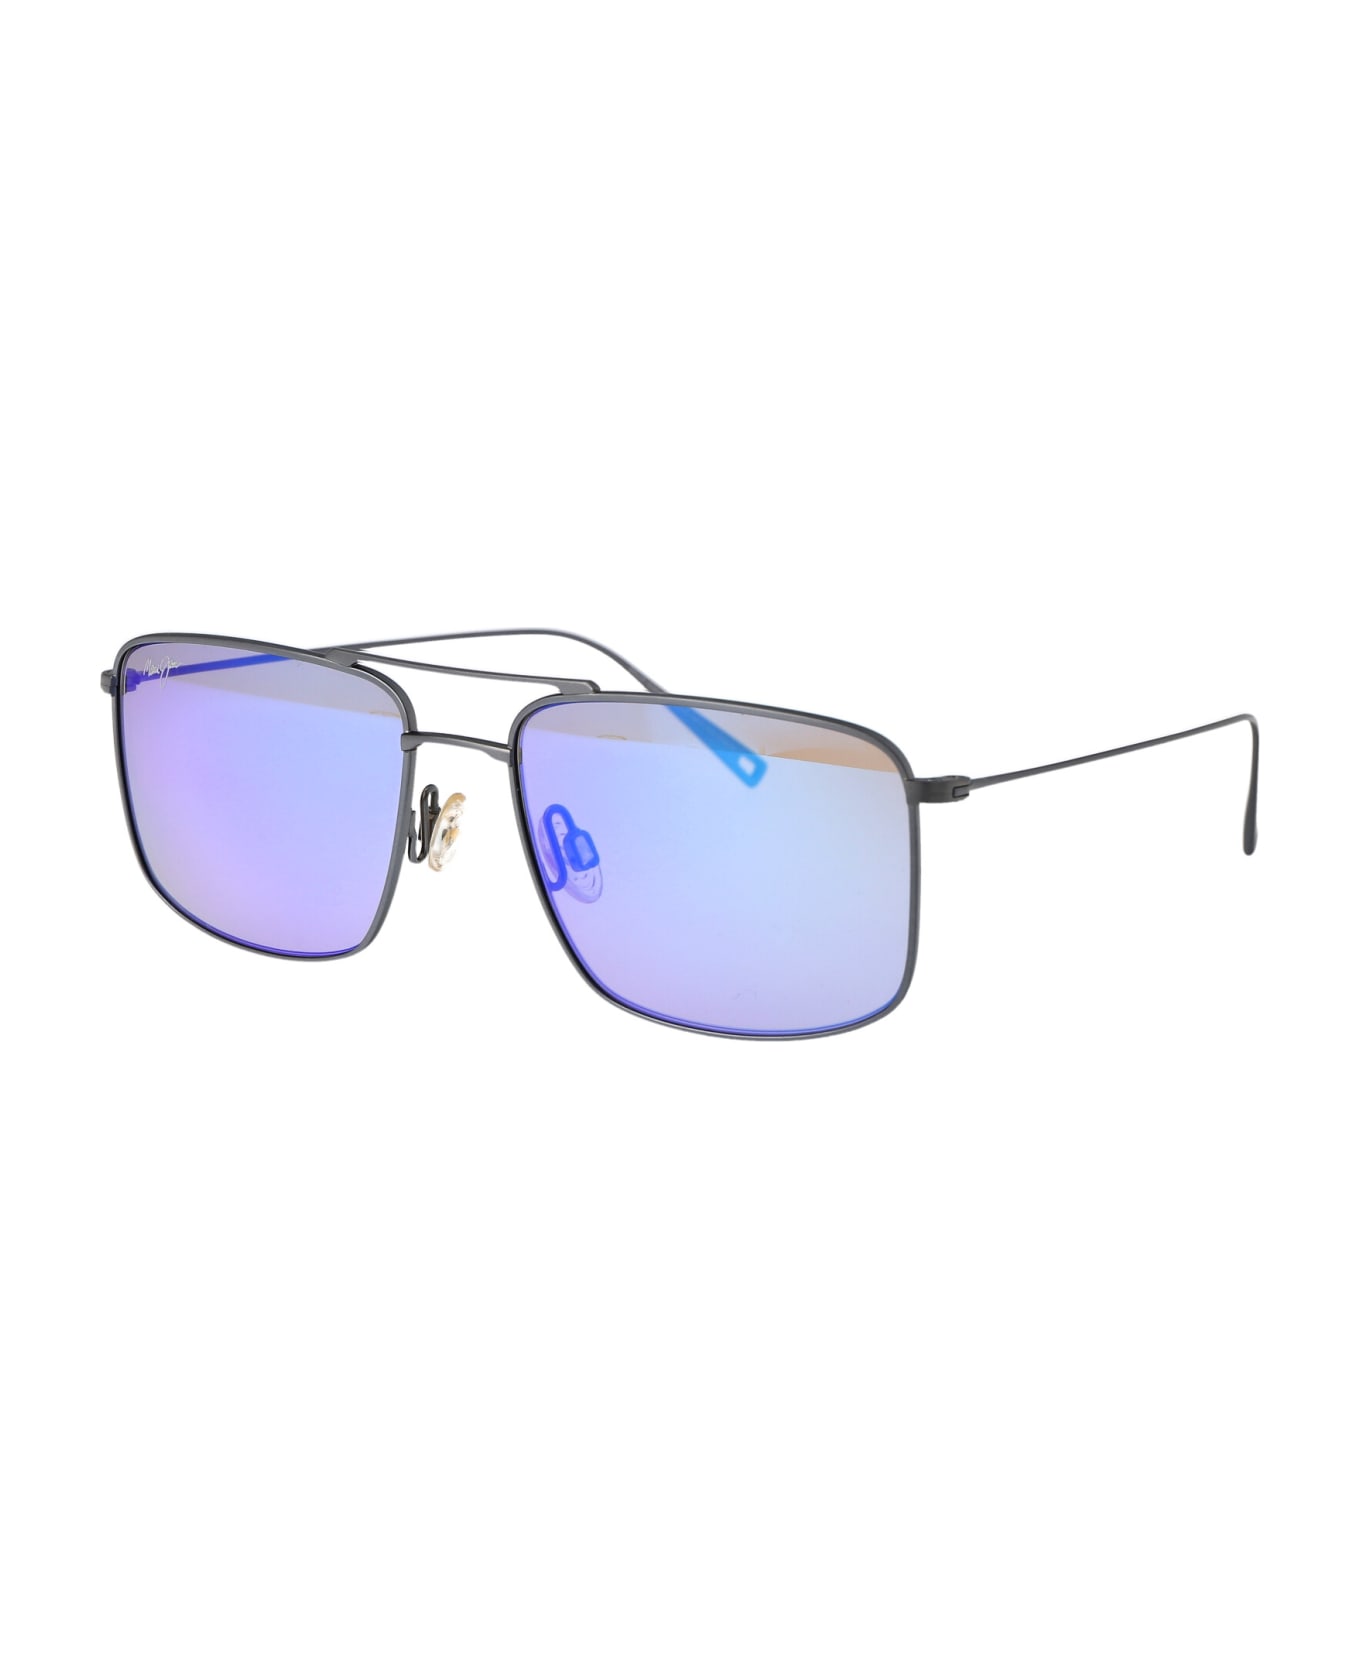 Maui Jim Aeko Sunglasses - 03 BLUE HAWAII DOVE GREY サングラス